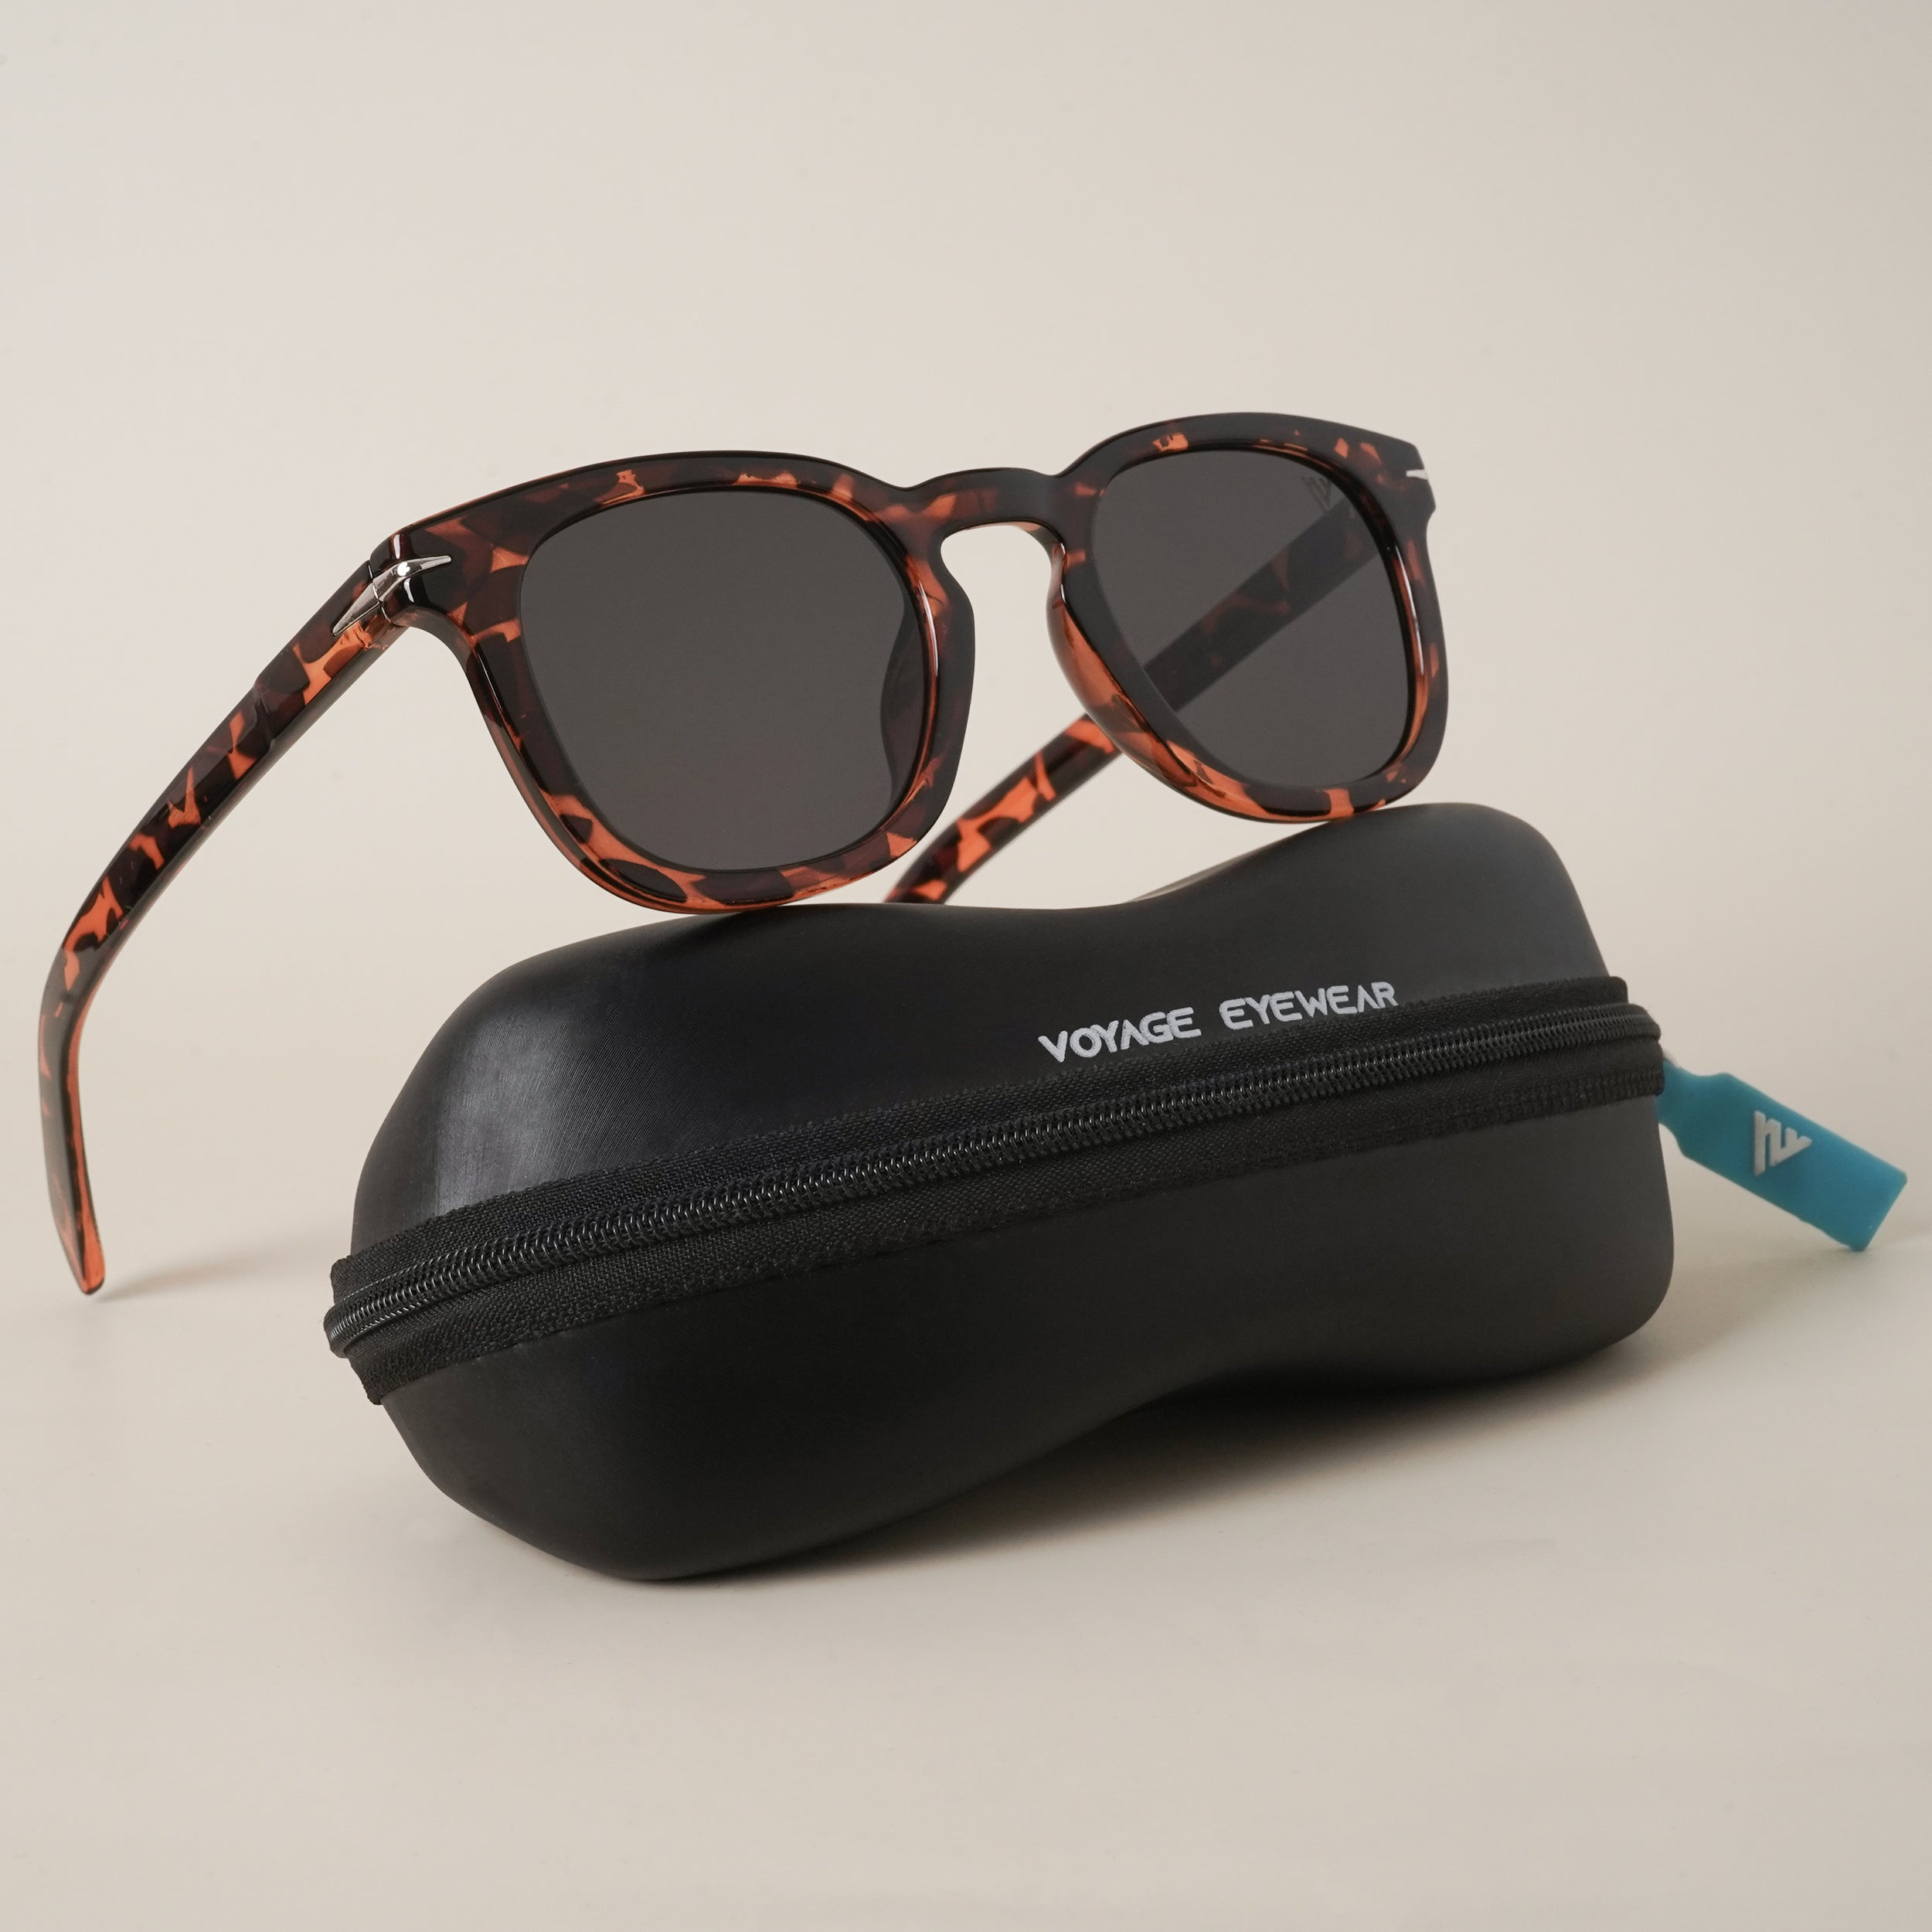 Buy Voyage UV Protection Black Square Sunglasses for Men & Women (964MG3784  | Brown Frame | Black Lens) at Amazon.in